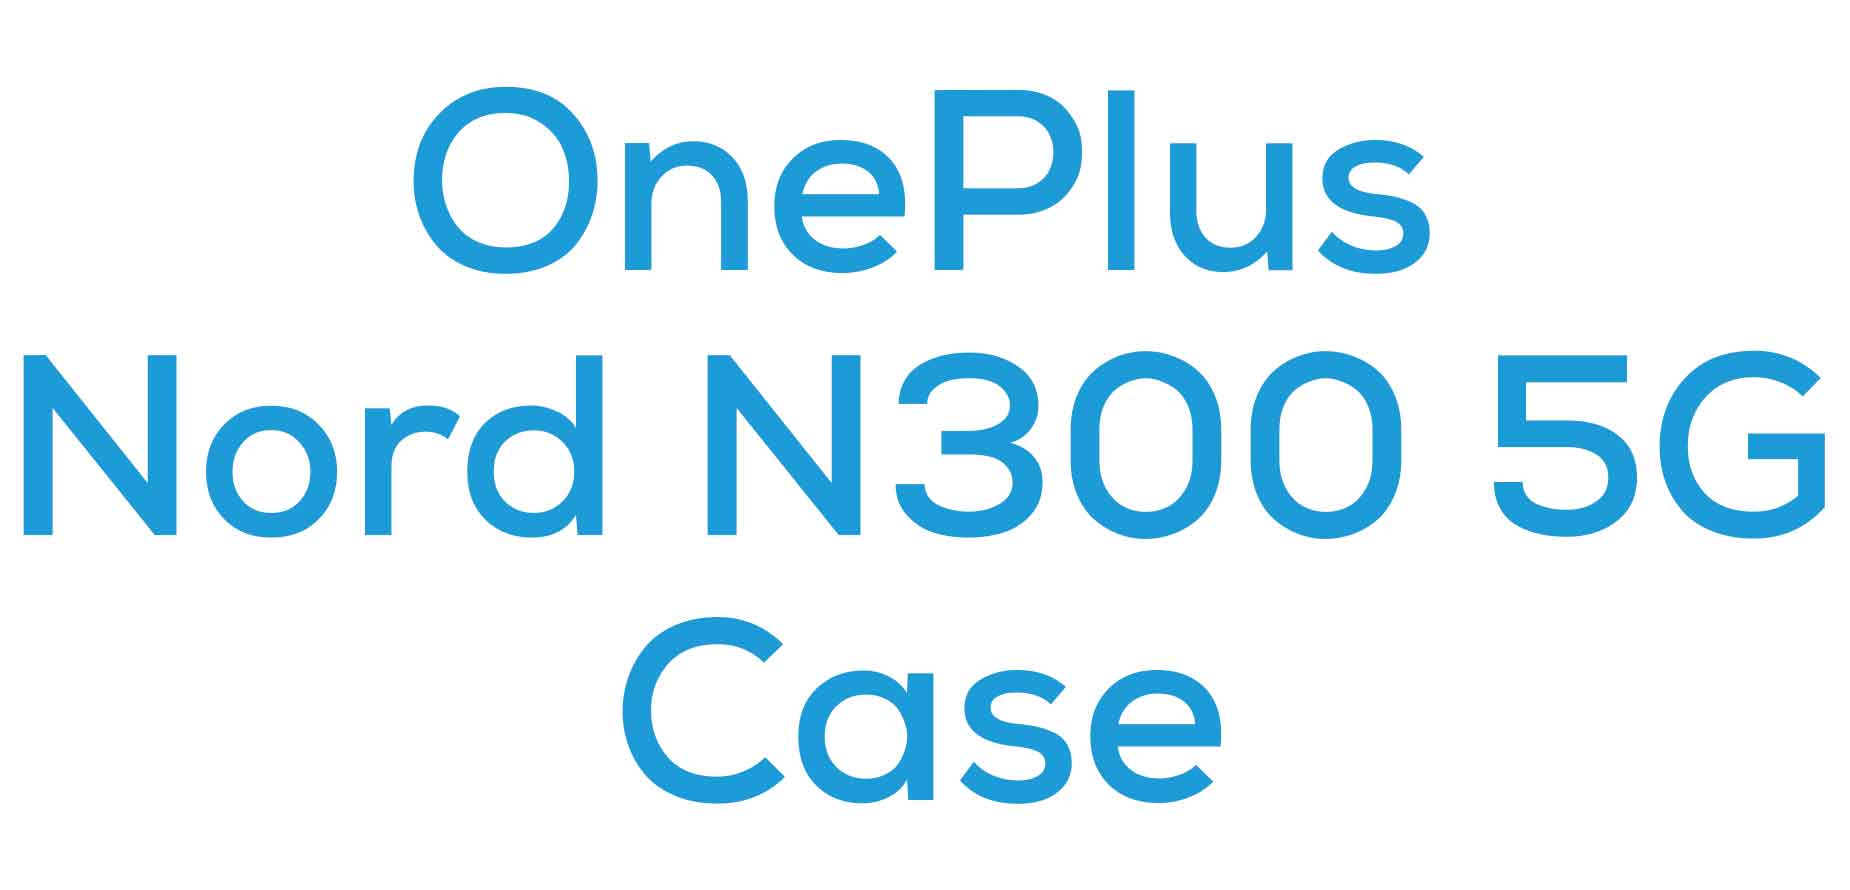 OnePlus Nord N300 5G Case